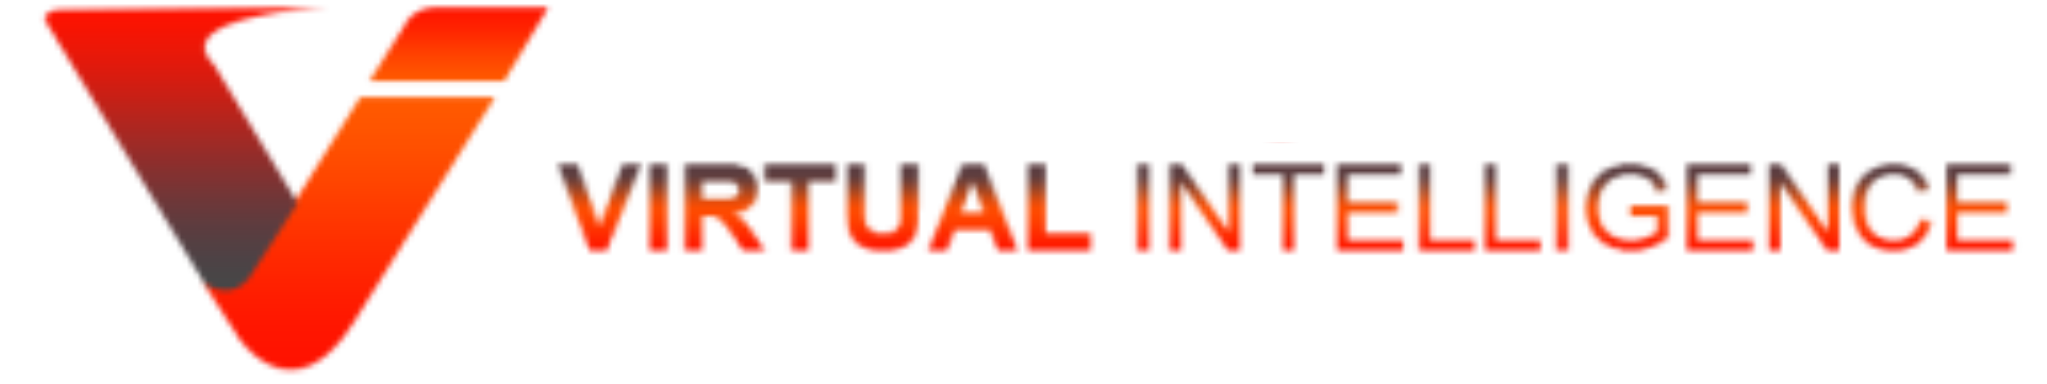 Virtual-Intelligence logo